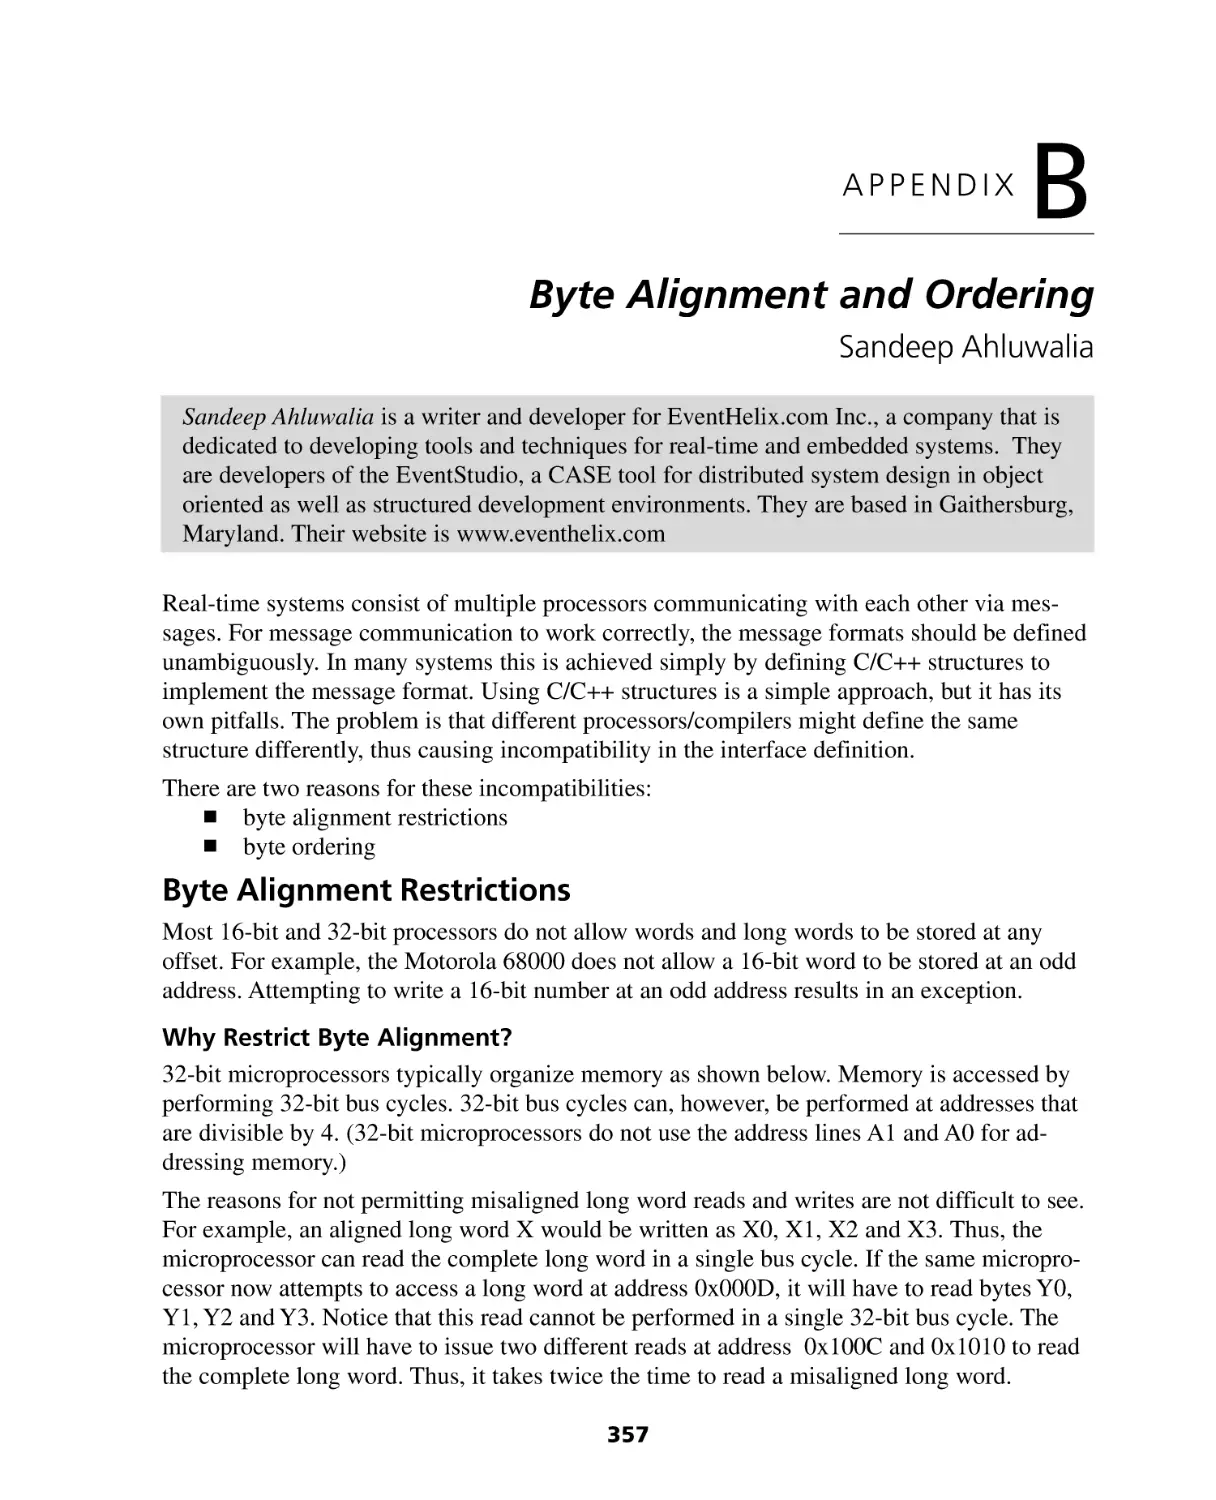 Appendix B
Byte Alignment Restrictions